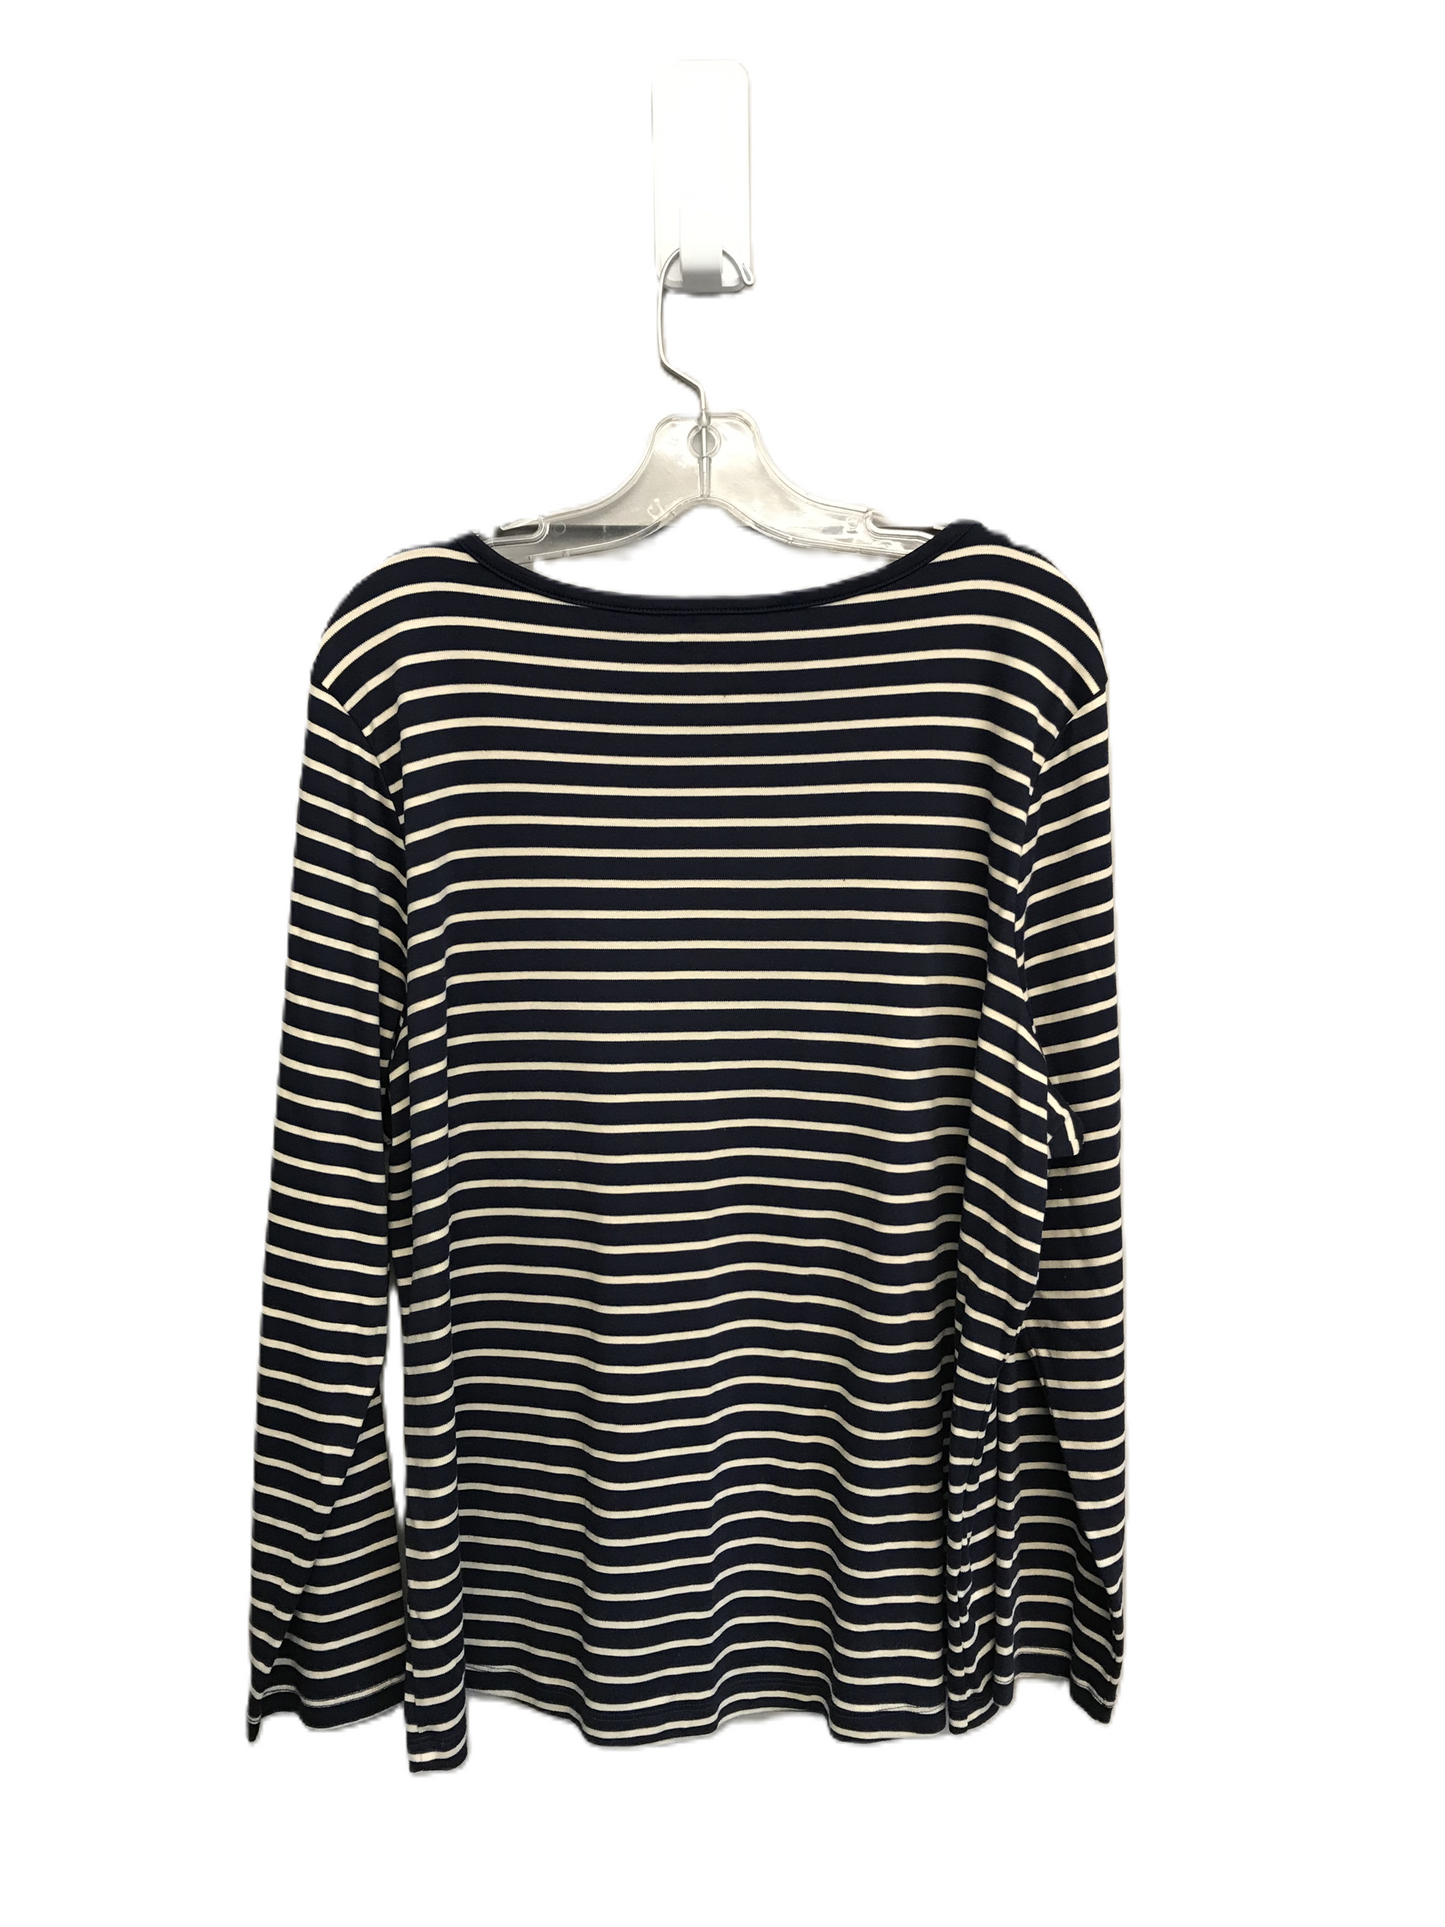 Striped Pattern Top Long Sleeve Basic By L.l. Bean, Size: 2x